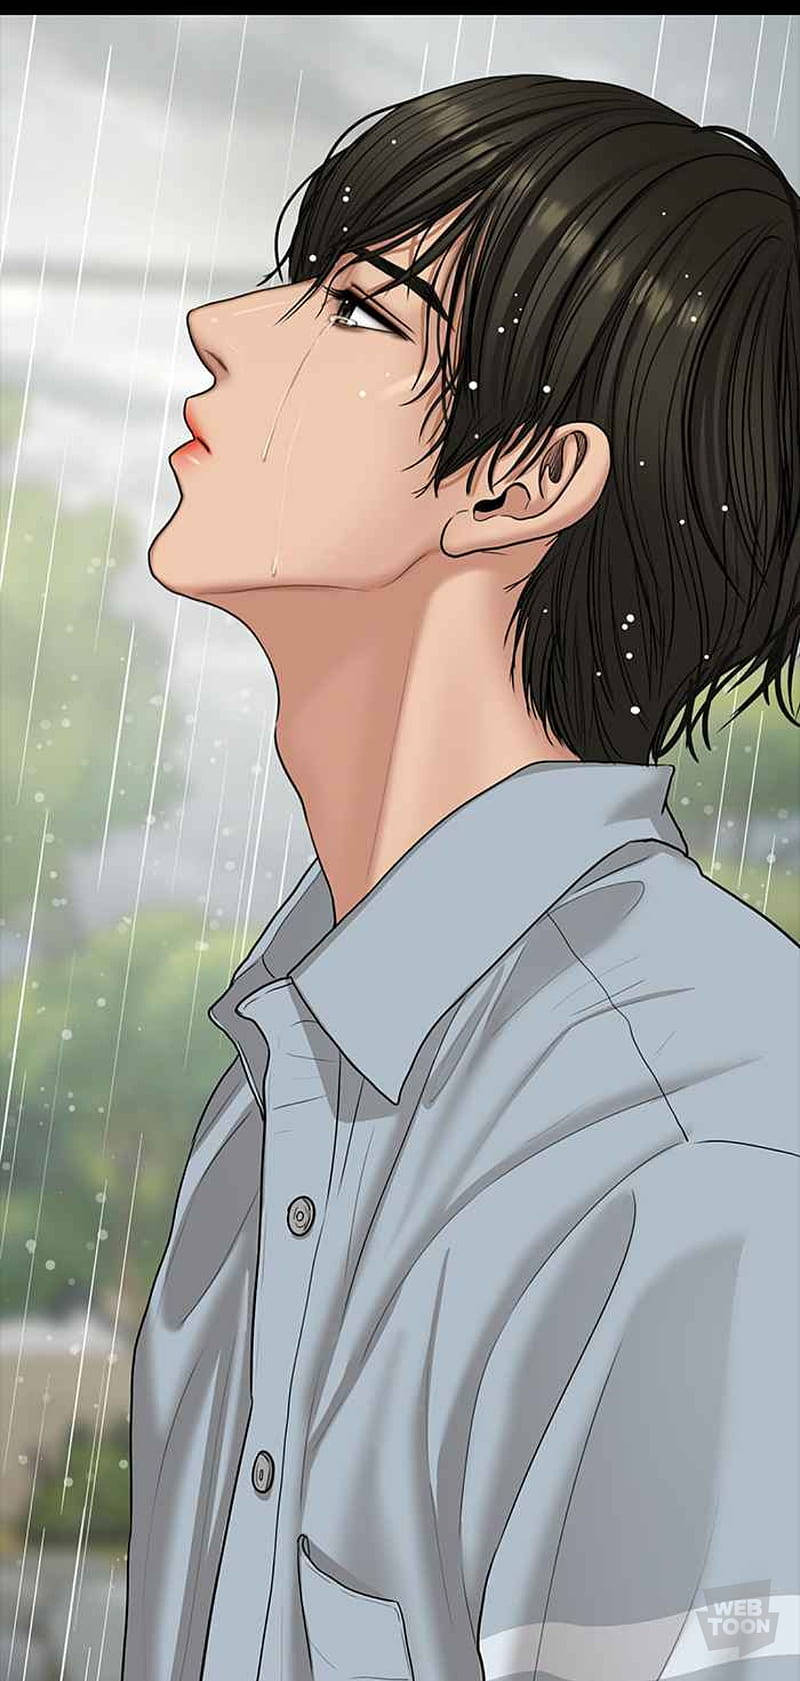 En mand kigger op mod regnen. Wallpaper